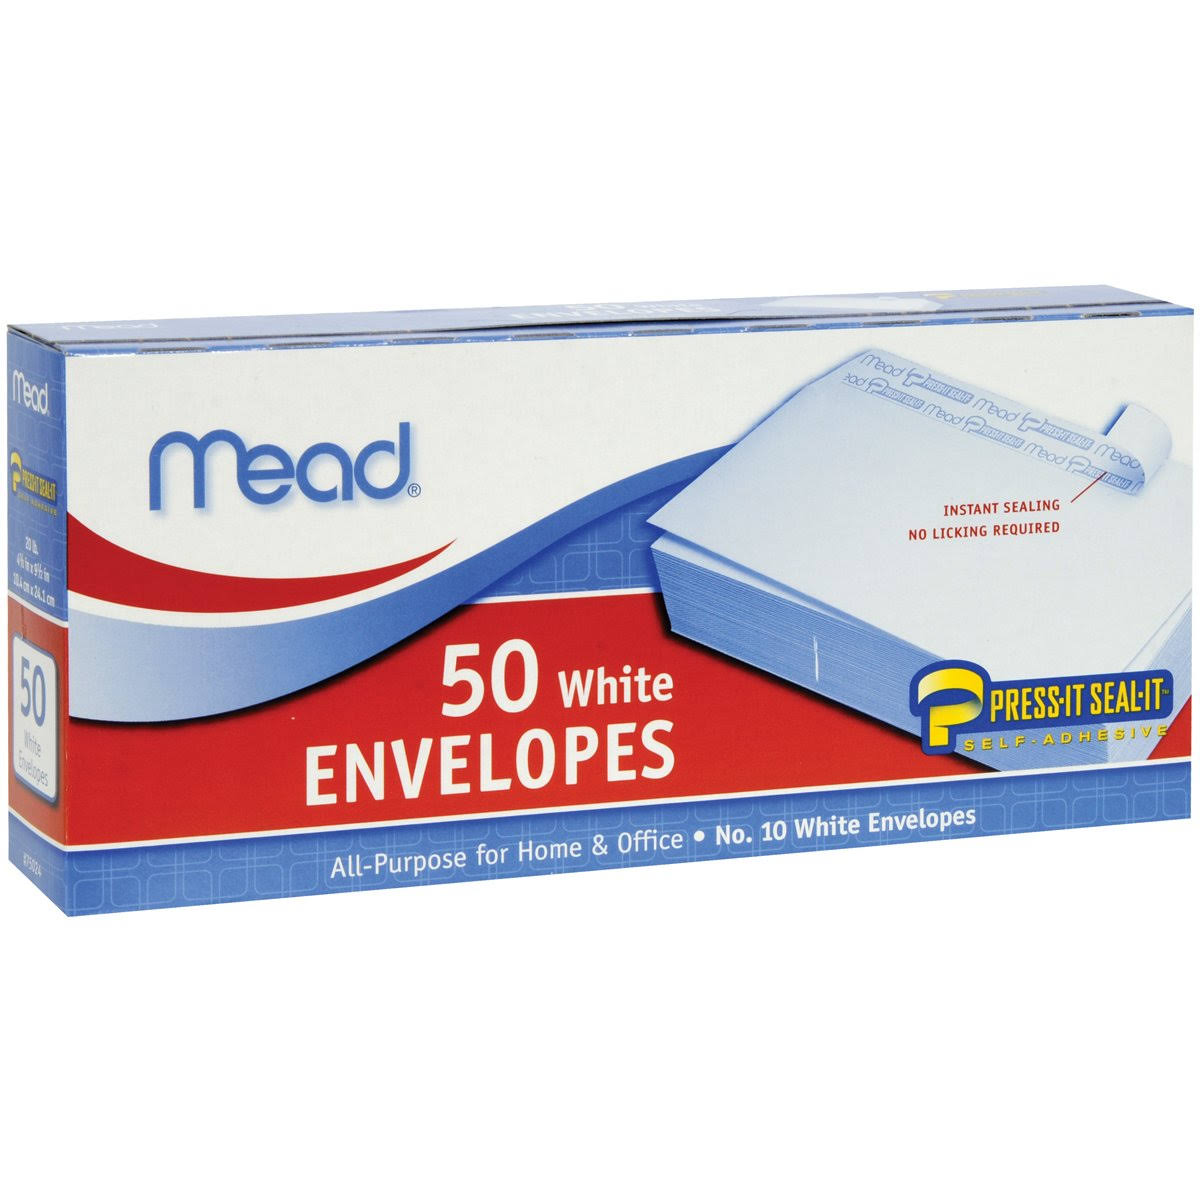 Mead Press-it Seal-it Business Envelope - White, 4-1/8in x 9-1/2in, 50pcs